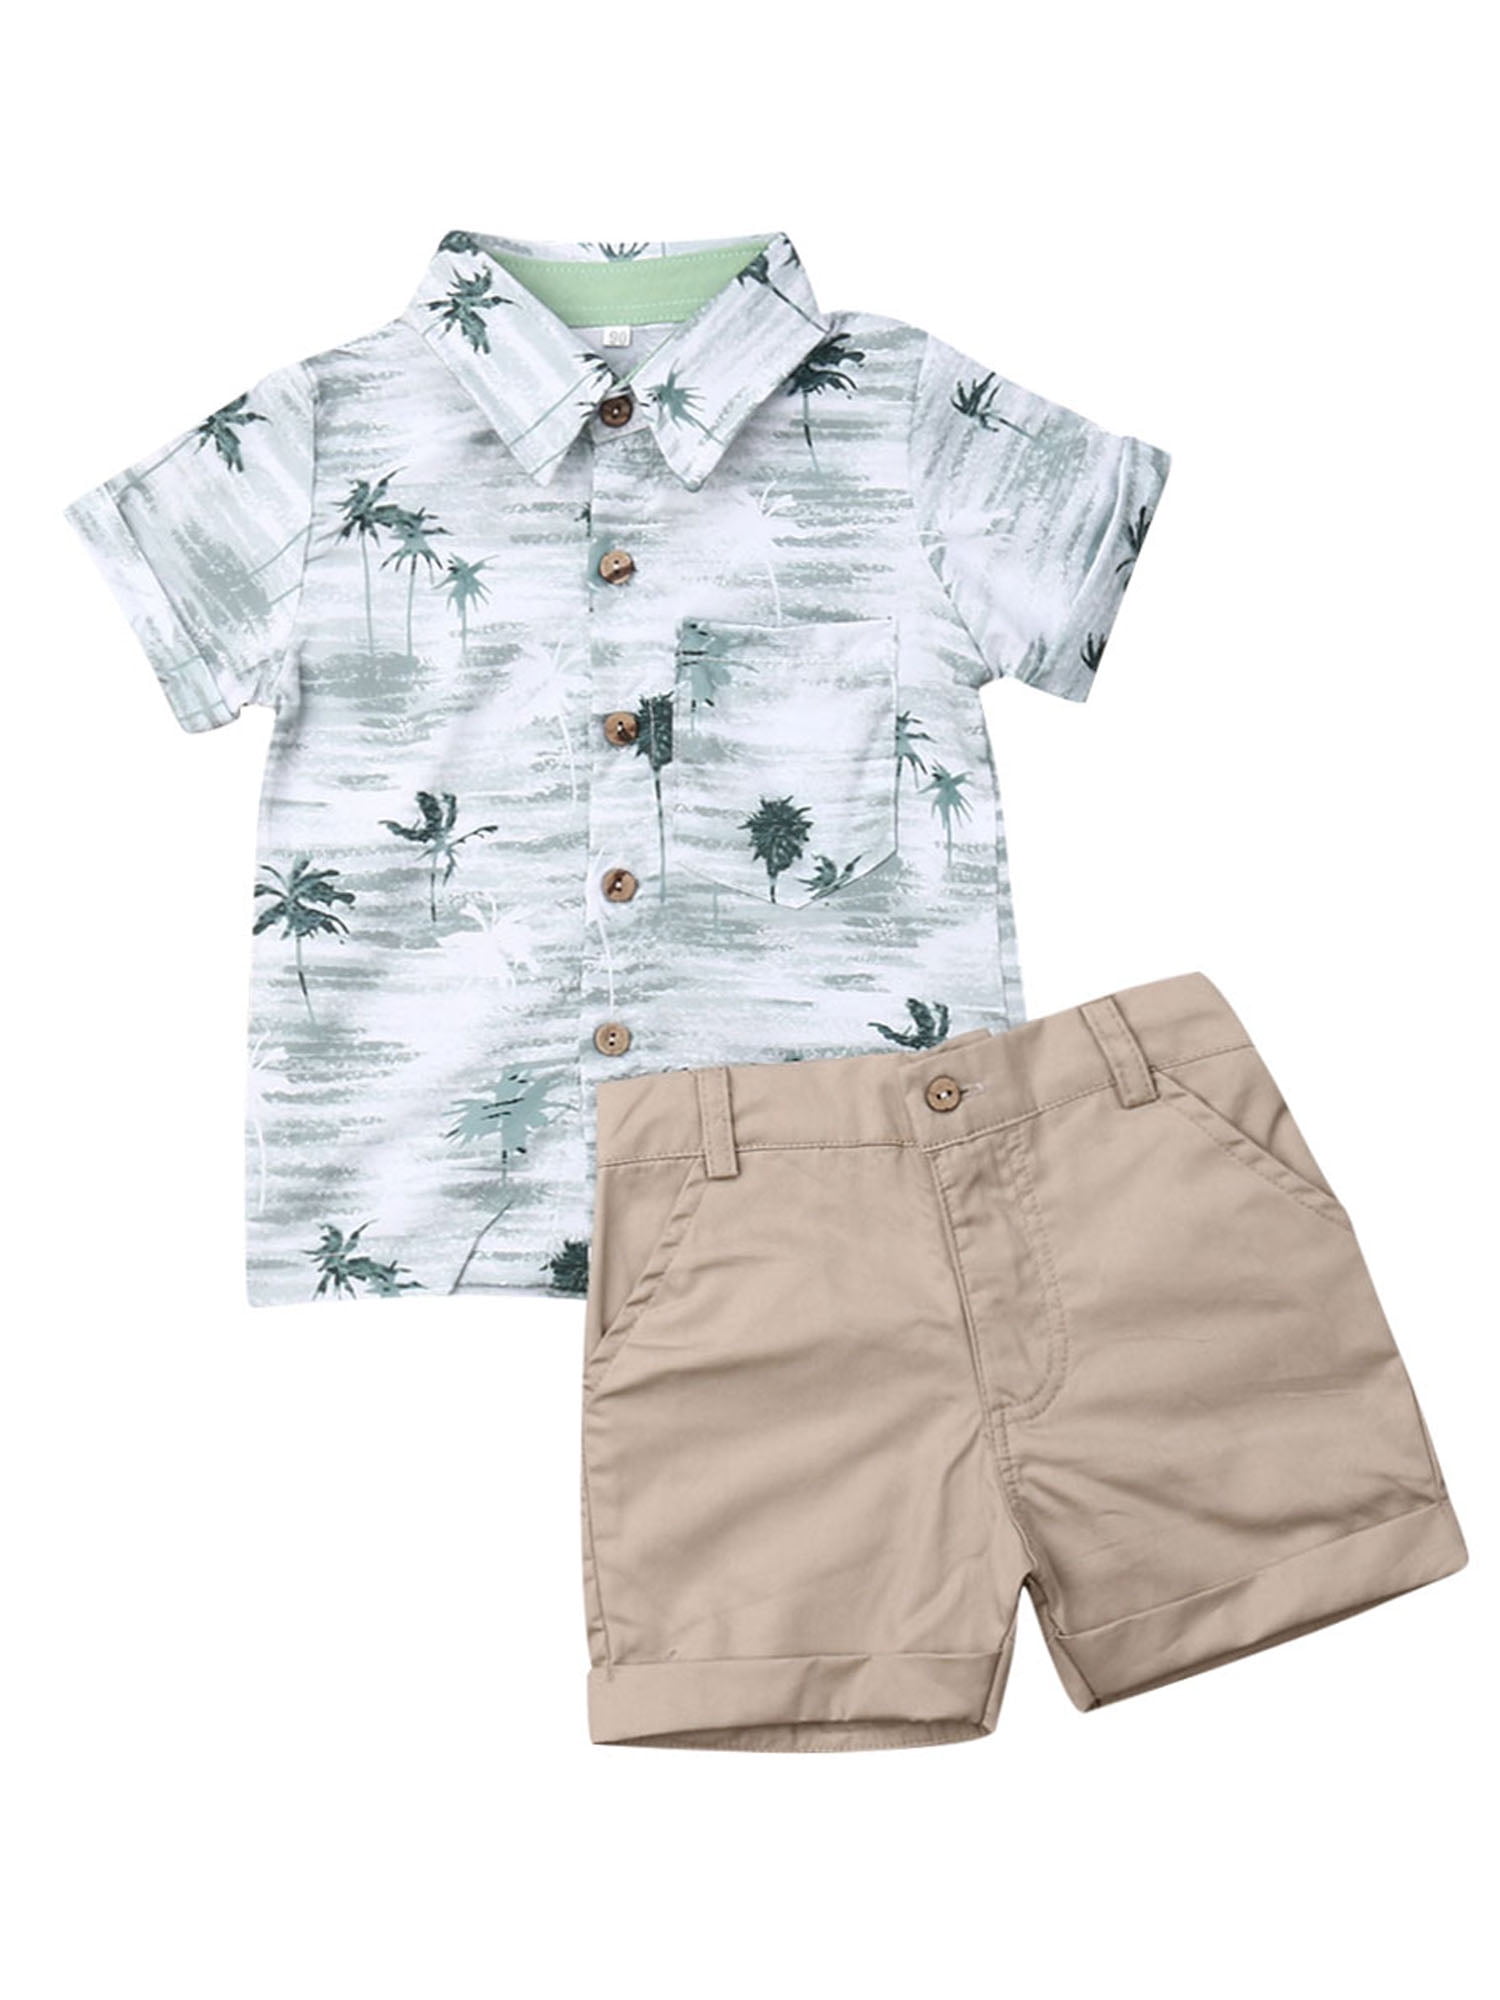 US Summer Toddler Kids Baby Boy T Shirt Tops+Short Pants Outfits Clothes Set 